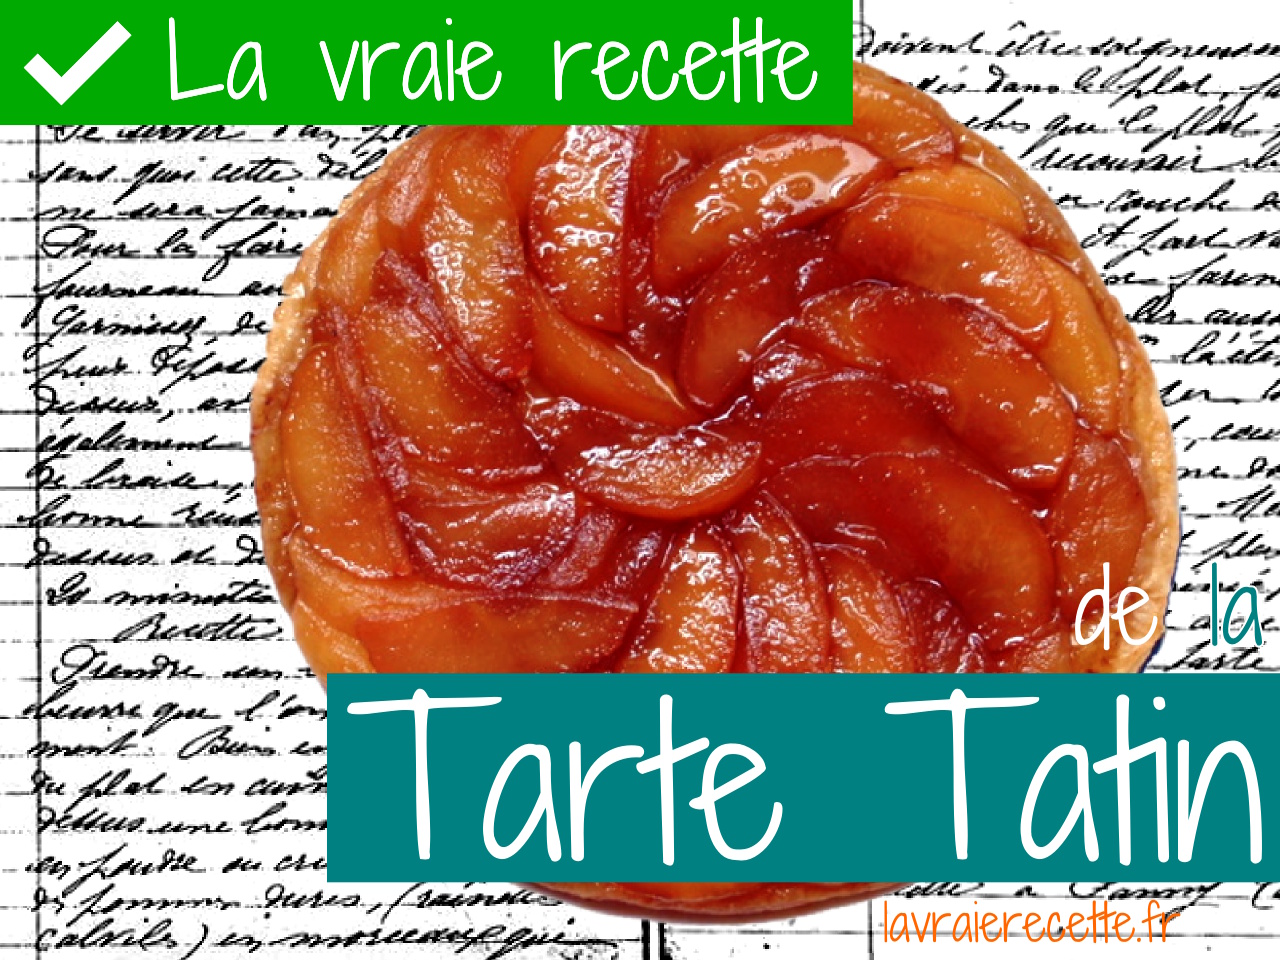 Tarte Tatin - Recette traditionnelle et son origine